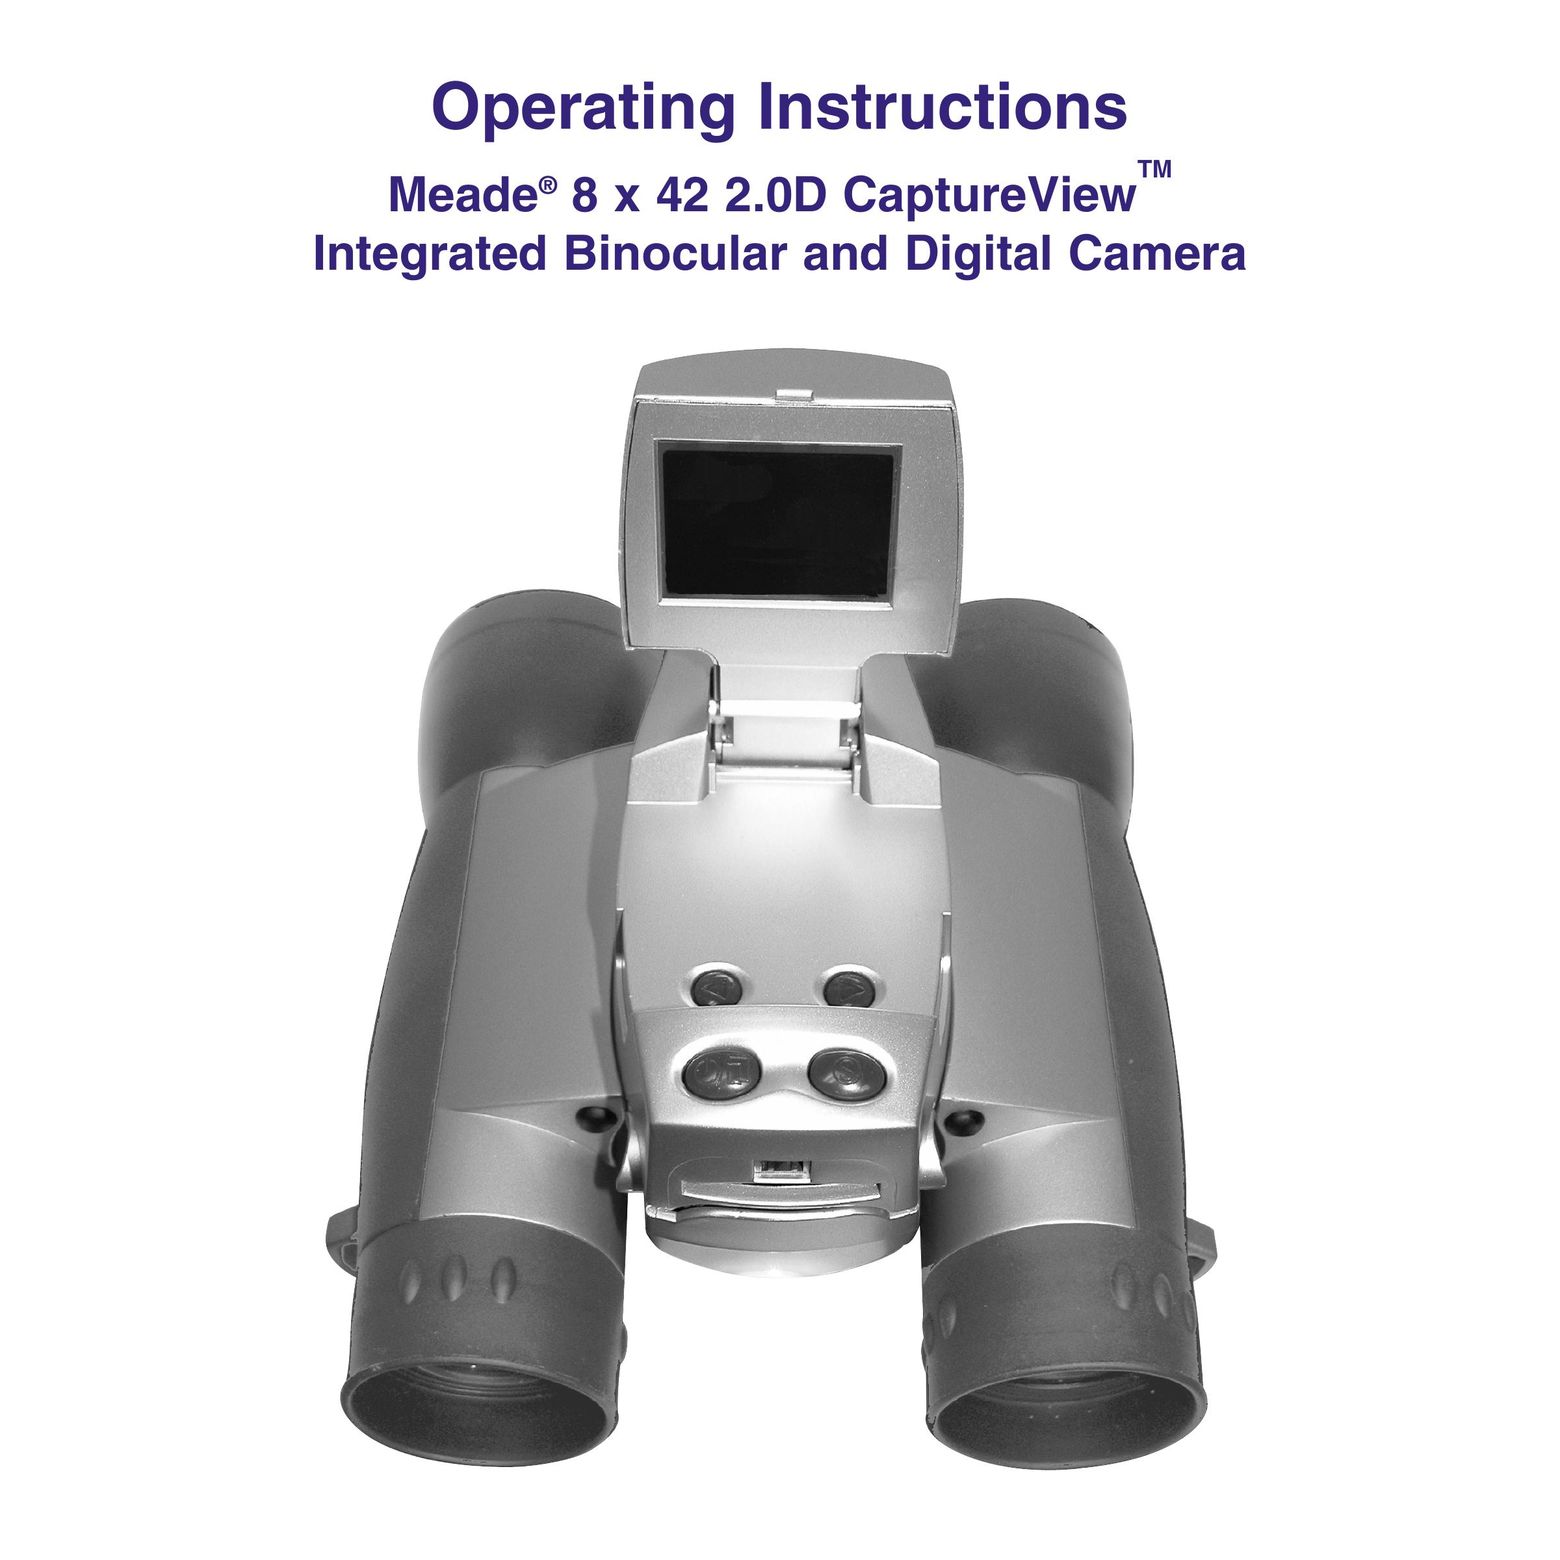 Meade Meade 8 x 42 2.0D CaptureView TM Integrated Binocular and Digital Camera Binoculars User Manual